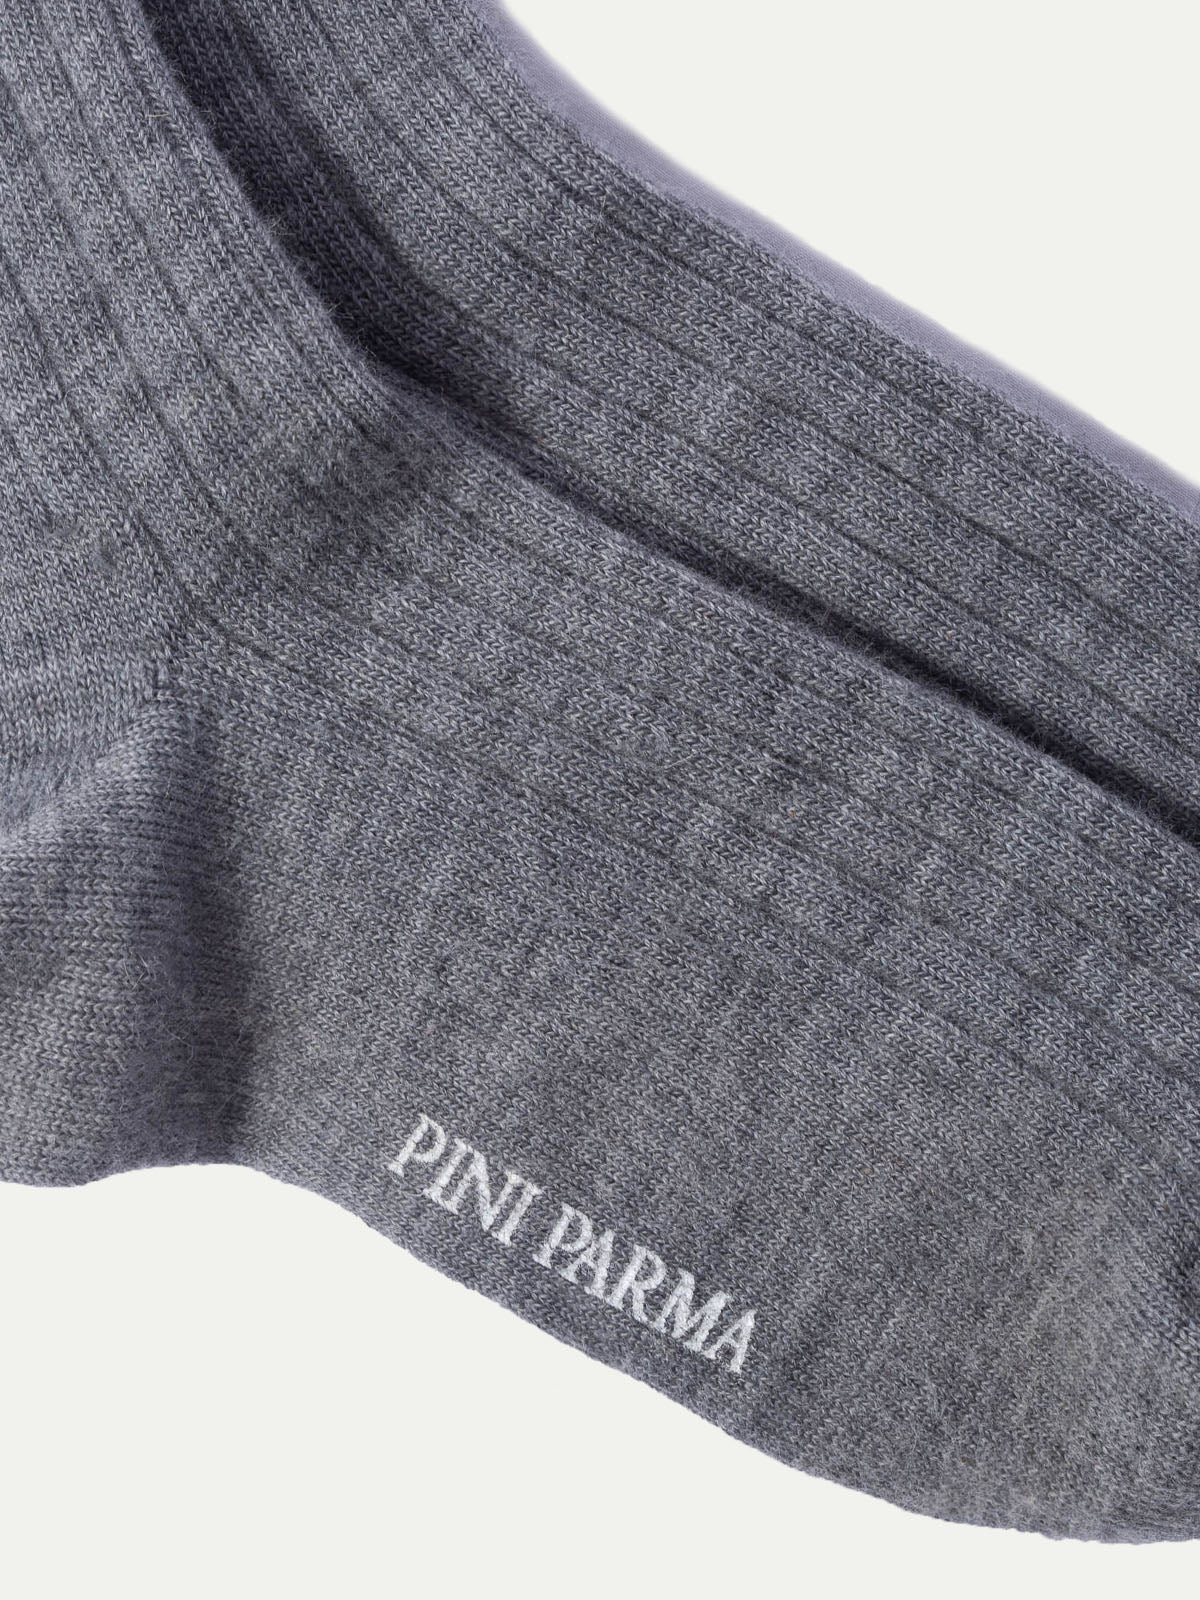 Light grey - Super durable Wool short socks - Made in Italy